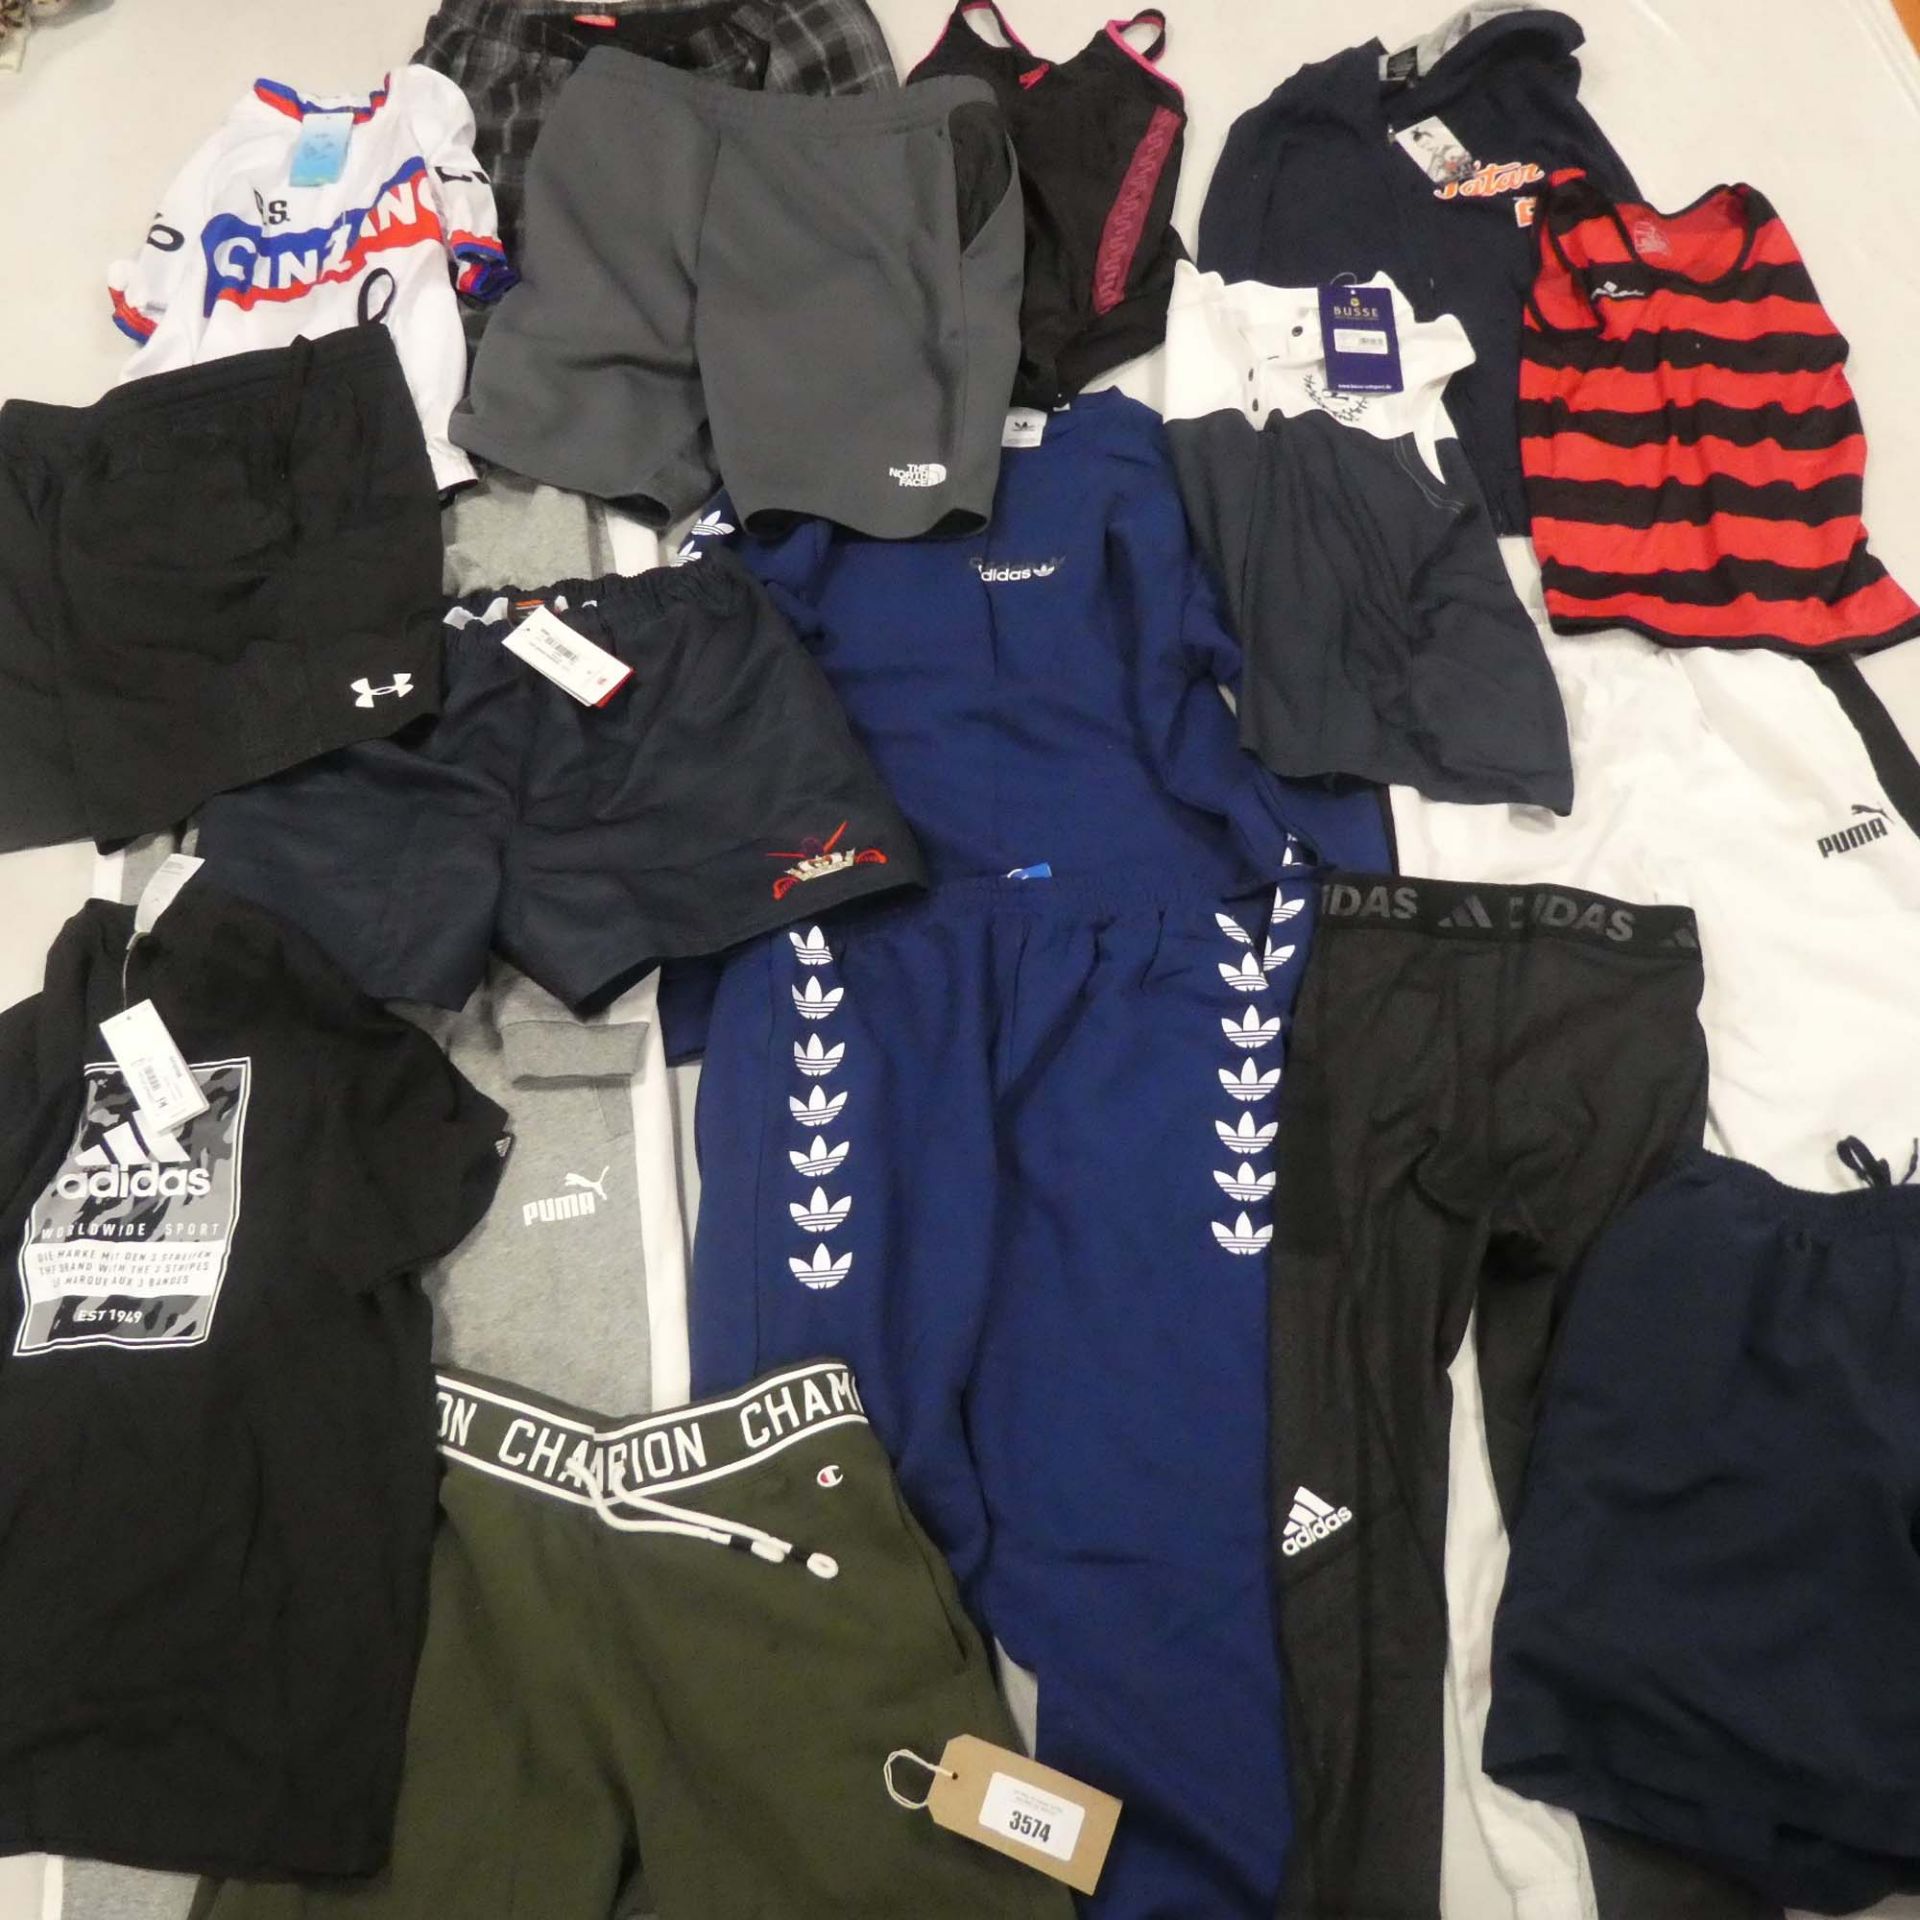 Bag containing sportswear, including Adidas, Puma, Champion, Underarmour etc